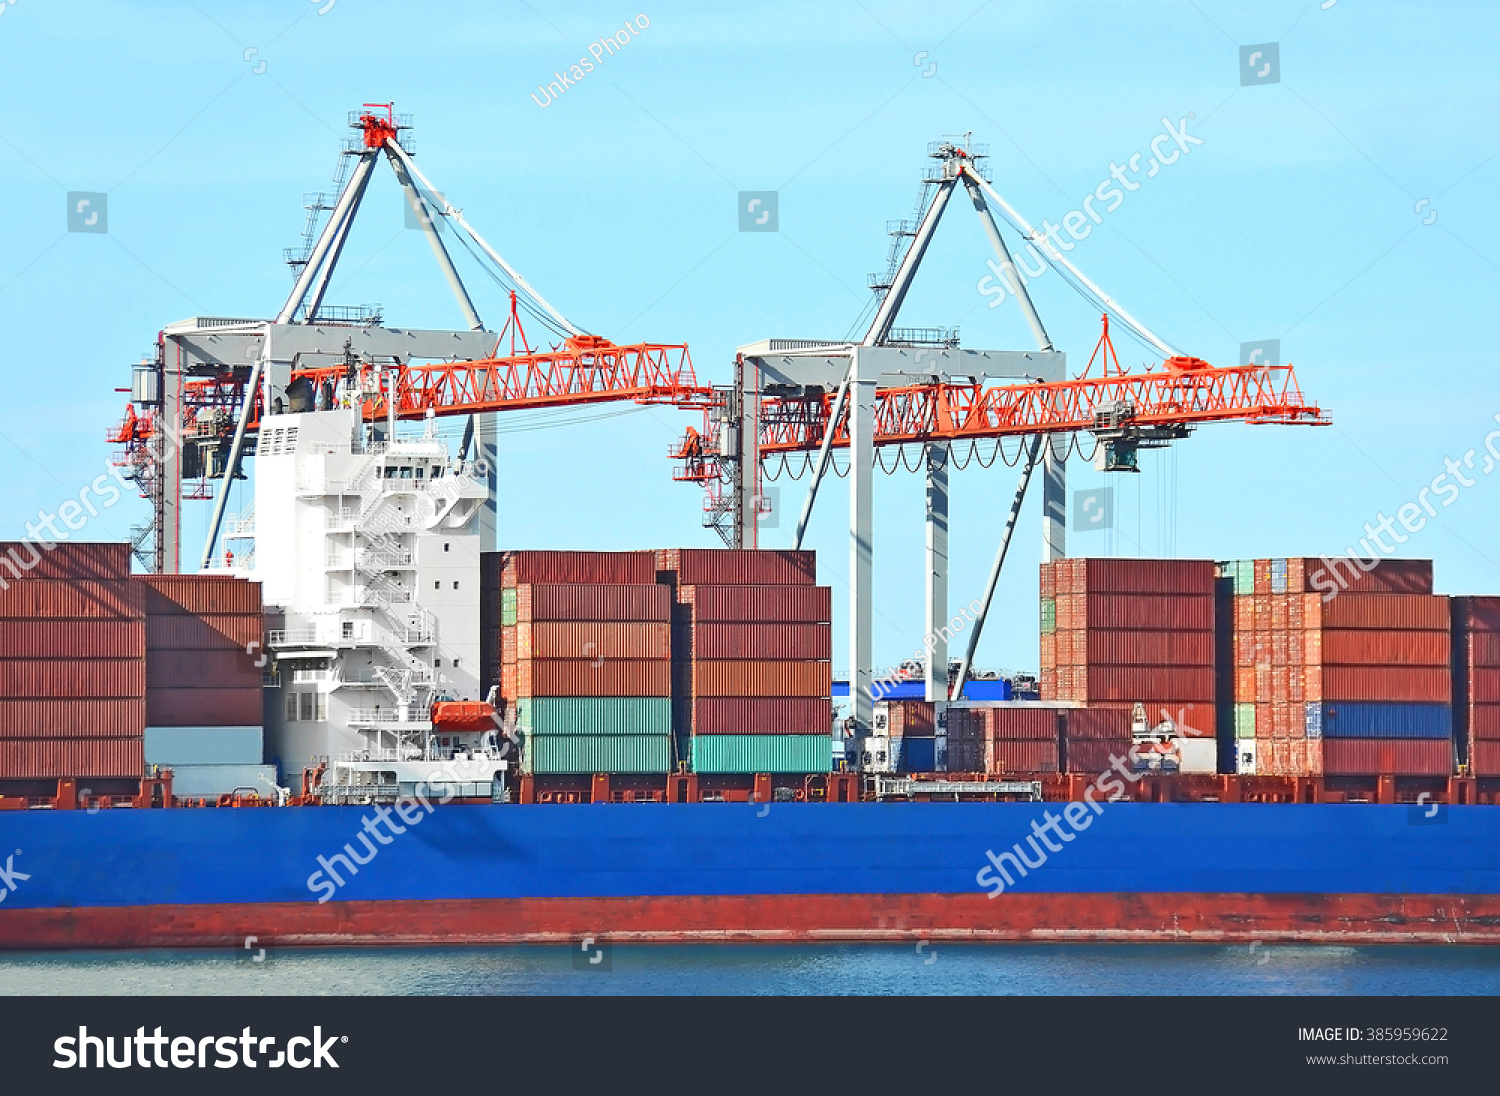 Container stack and ship under crane bridge #385959622